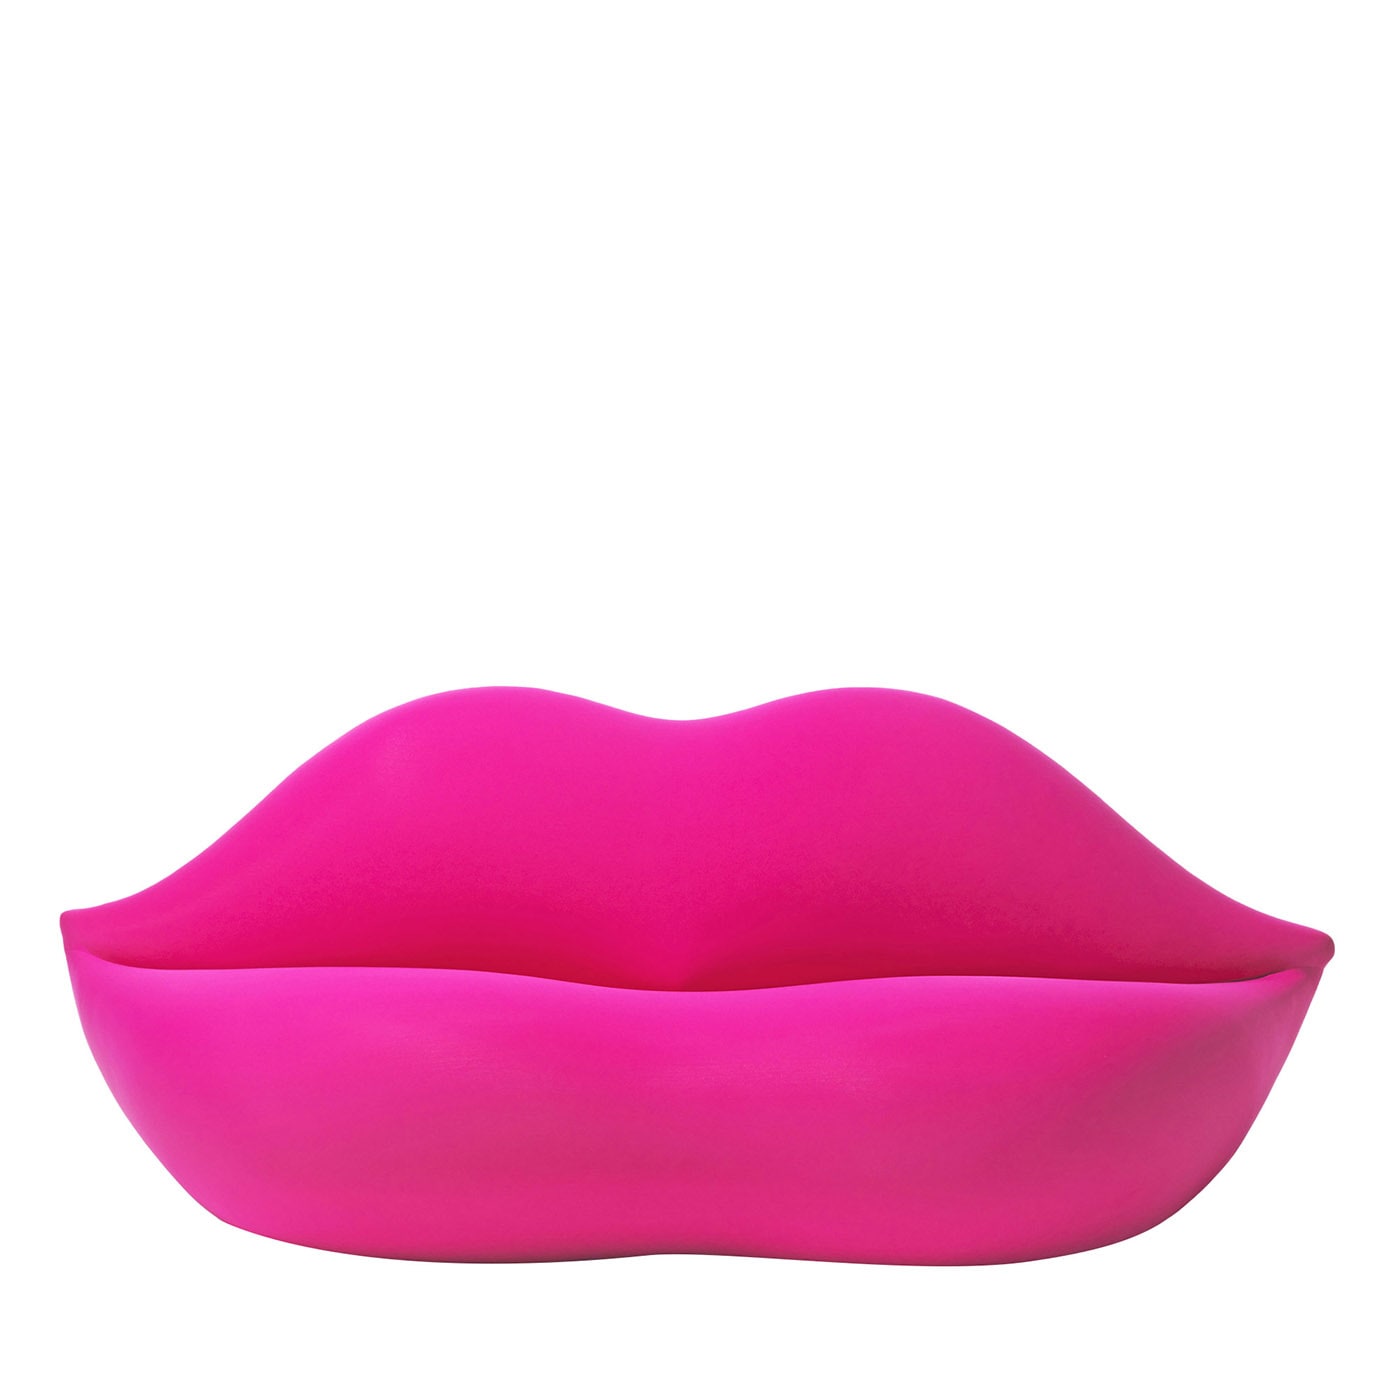 Bocca Pink Lady Limited Edition Sofa by Studio 65 - Gufram